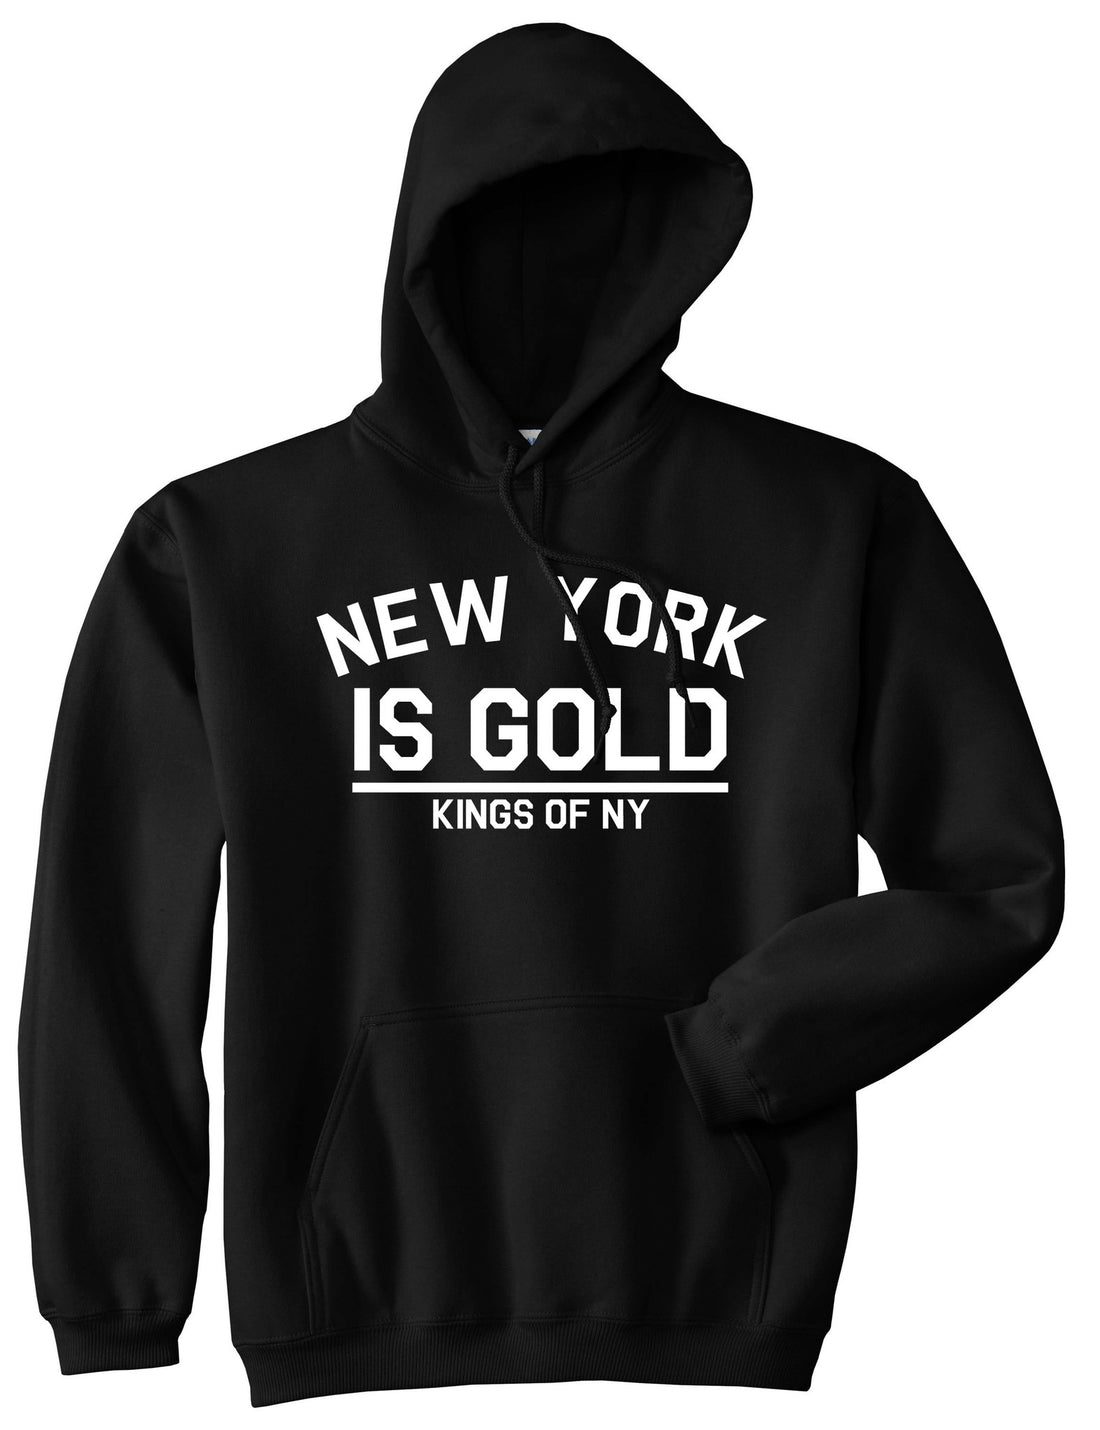 New York Is Gold Pullover Hoodie Hoody in Black by Kings Of NY